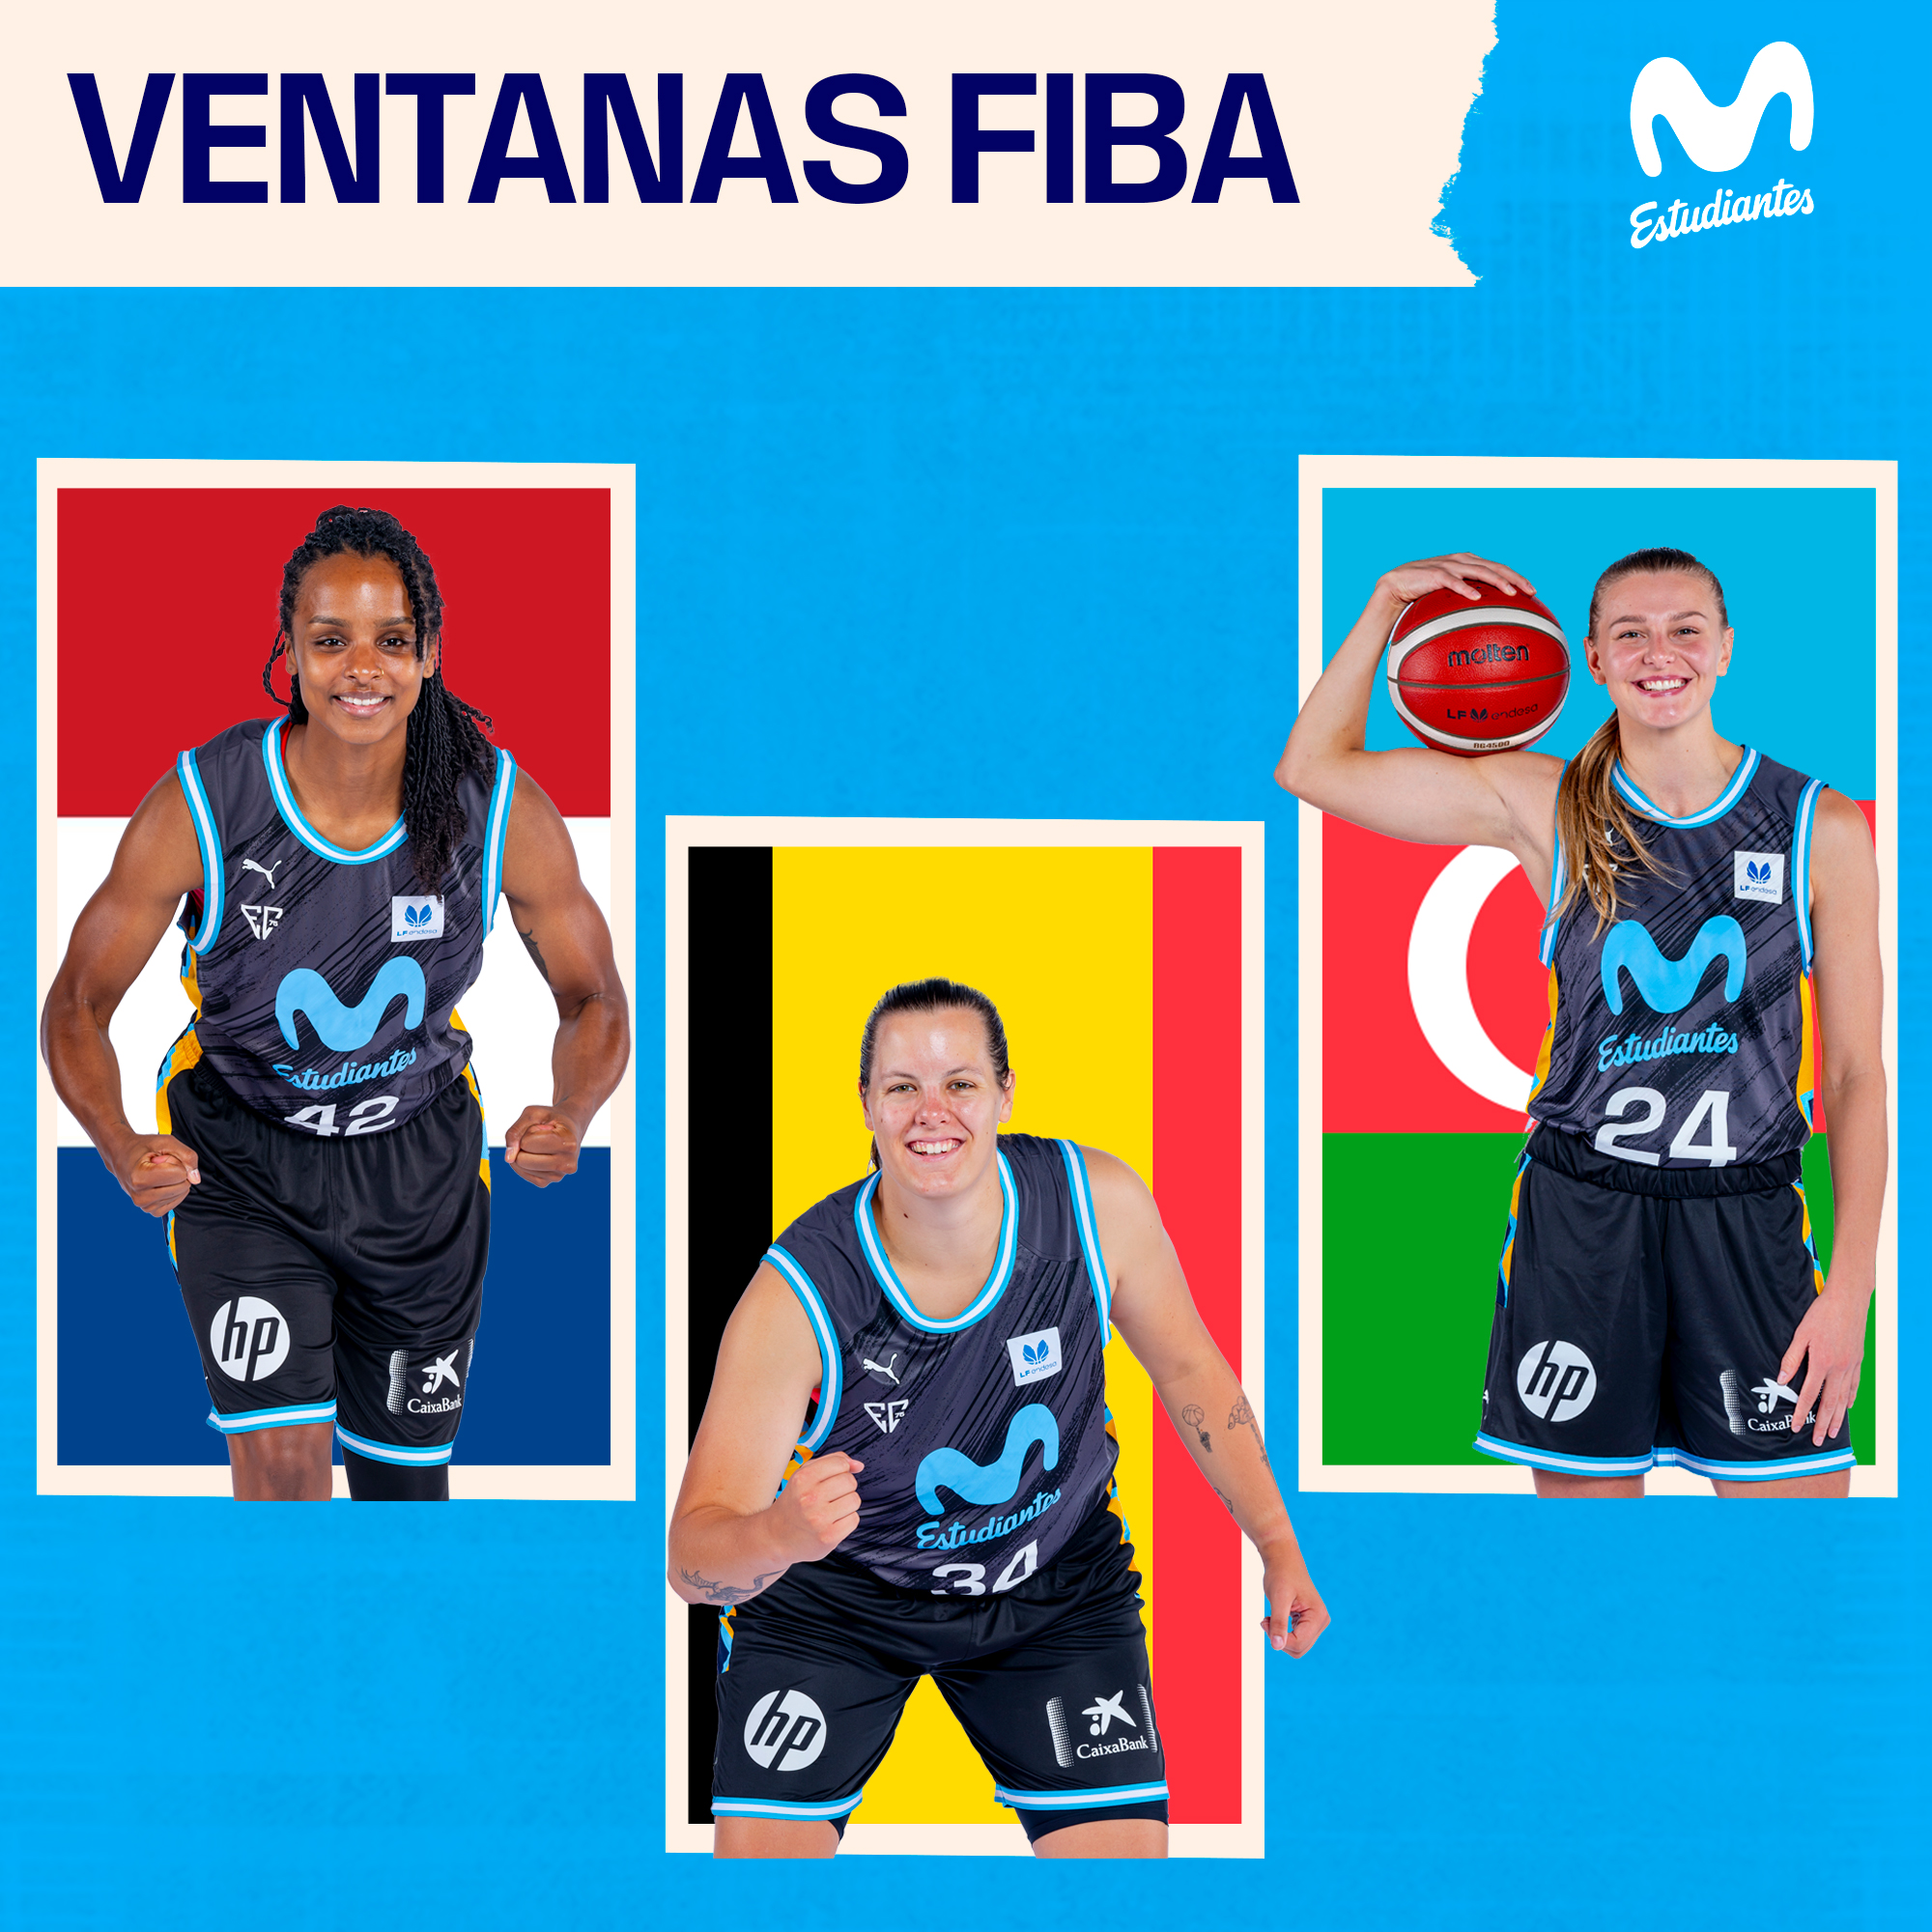 Ventanas FIBA femeninas: Massey, Treffers y Mollenhauer